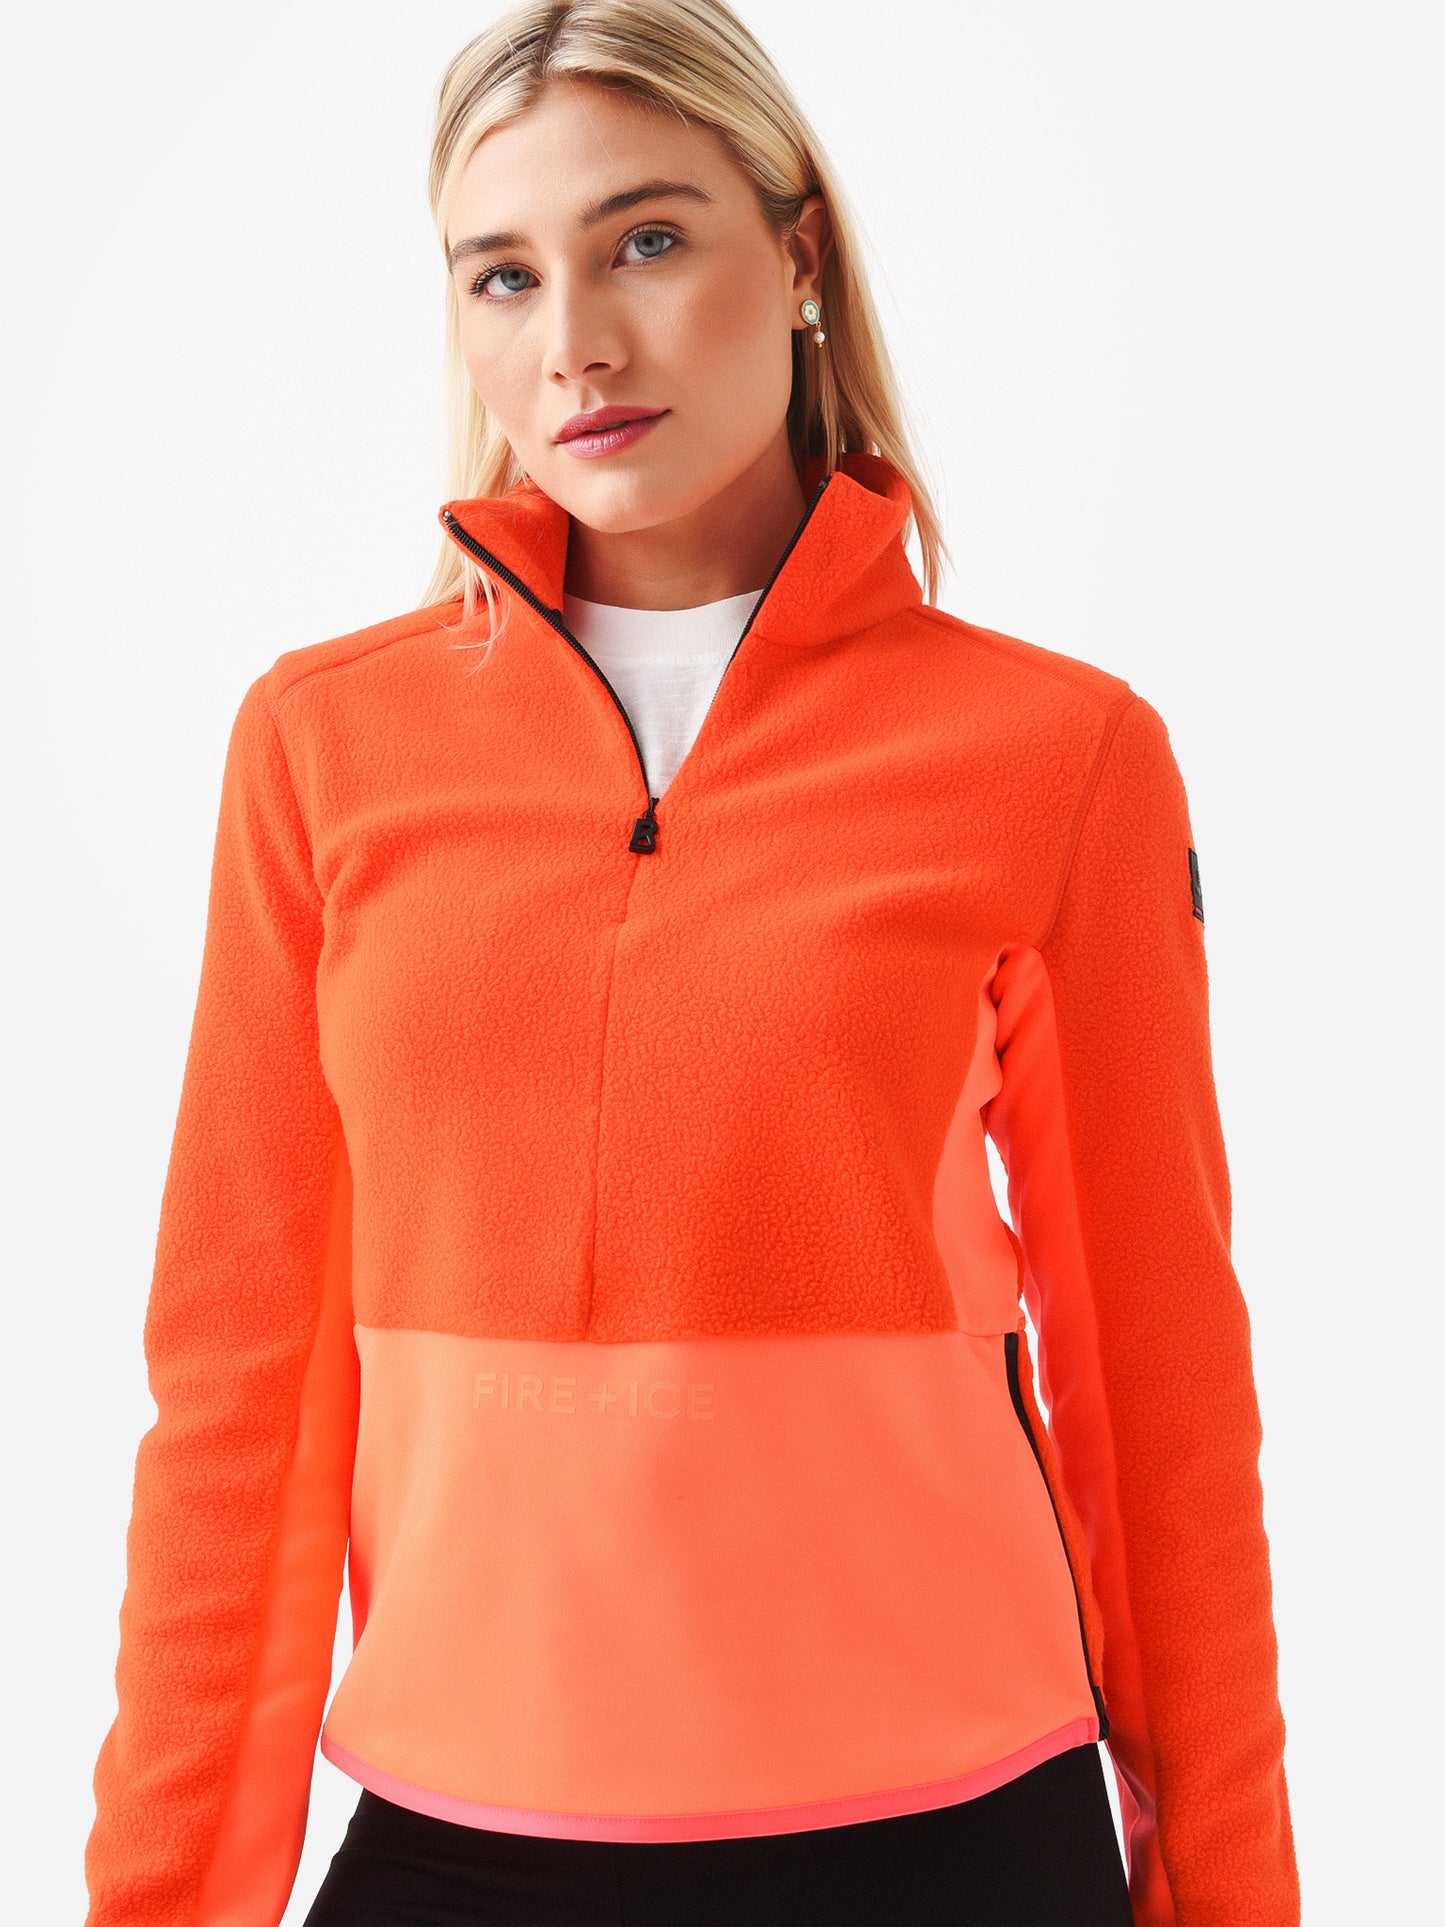 Bogner Fire + Ice Women's Lexi Fleece Jacket